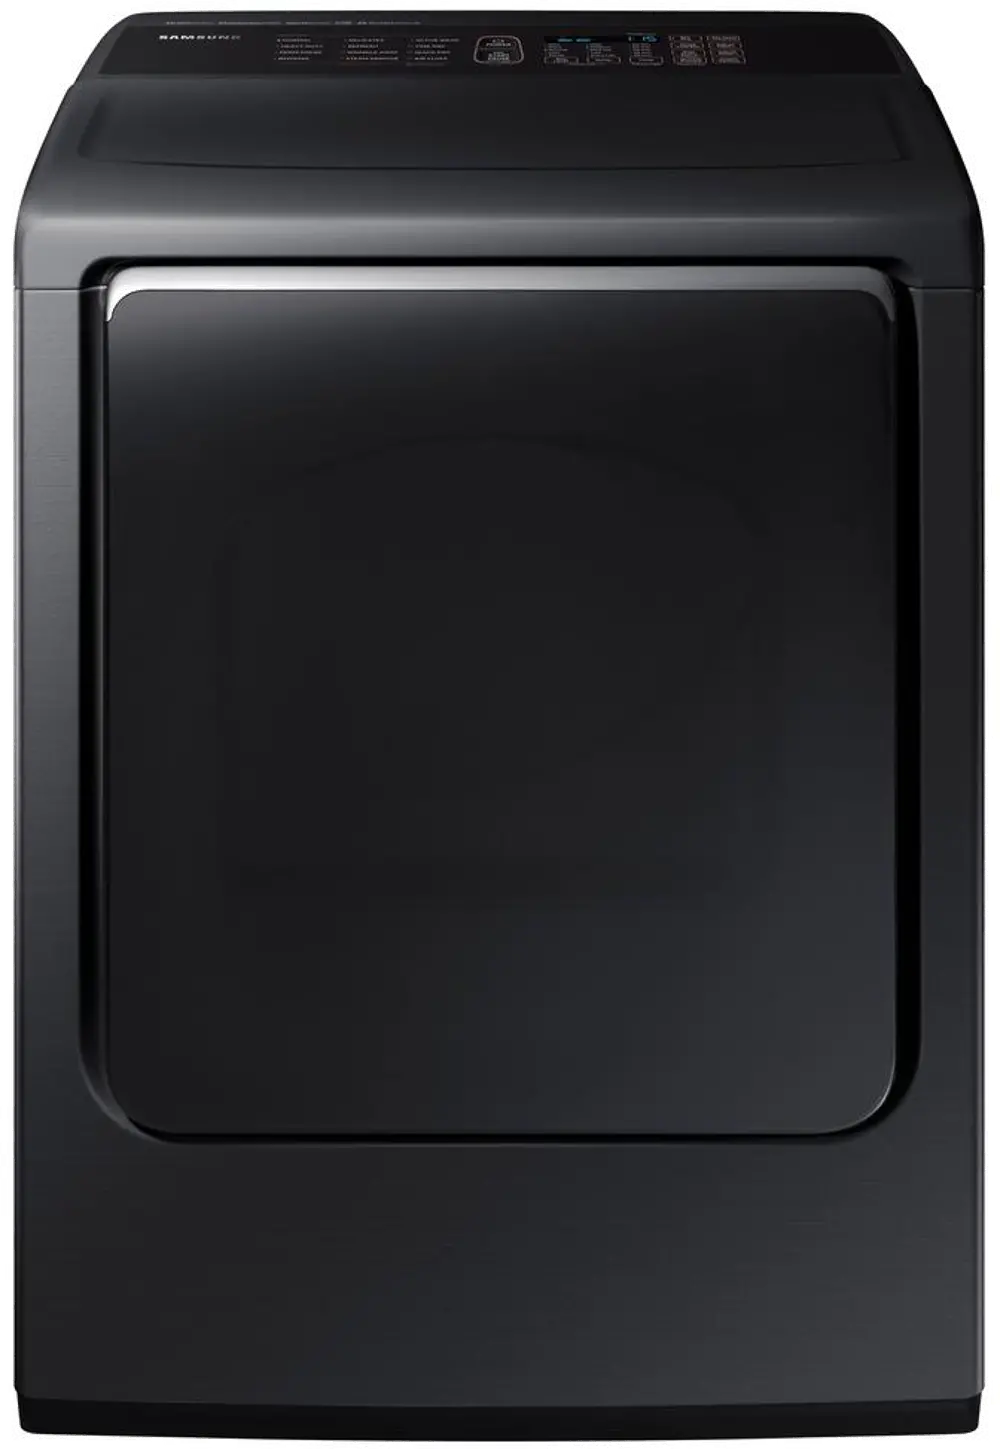 DVG54M8750V Samsung Gas Dryer with Steam - 7.4 cu. ft. Black Stainless Steel-1